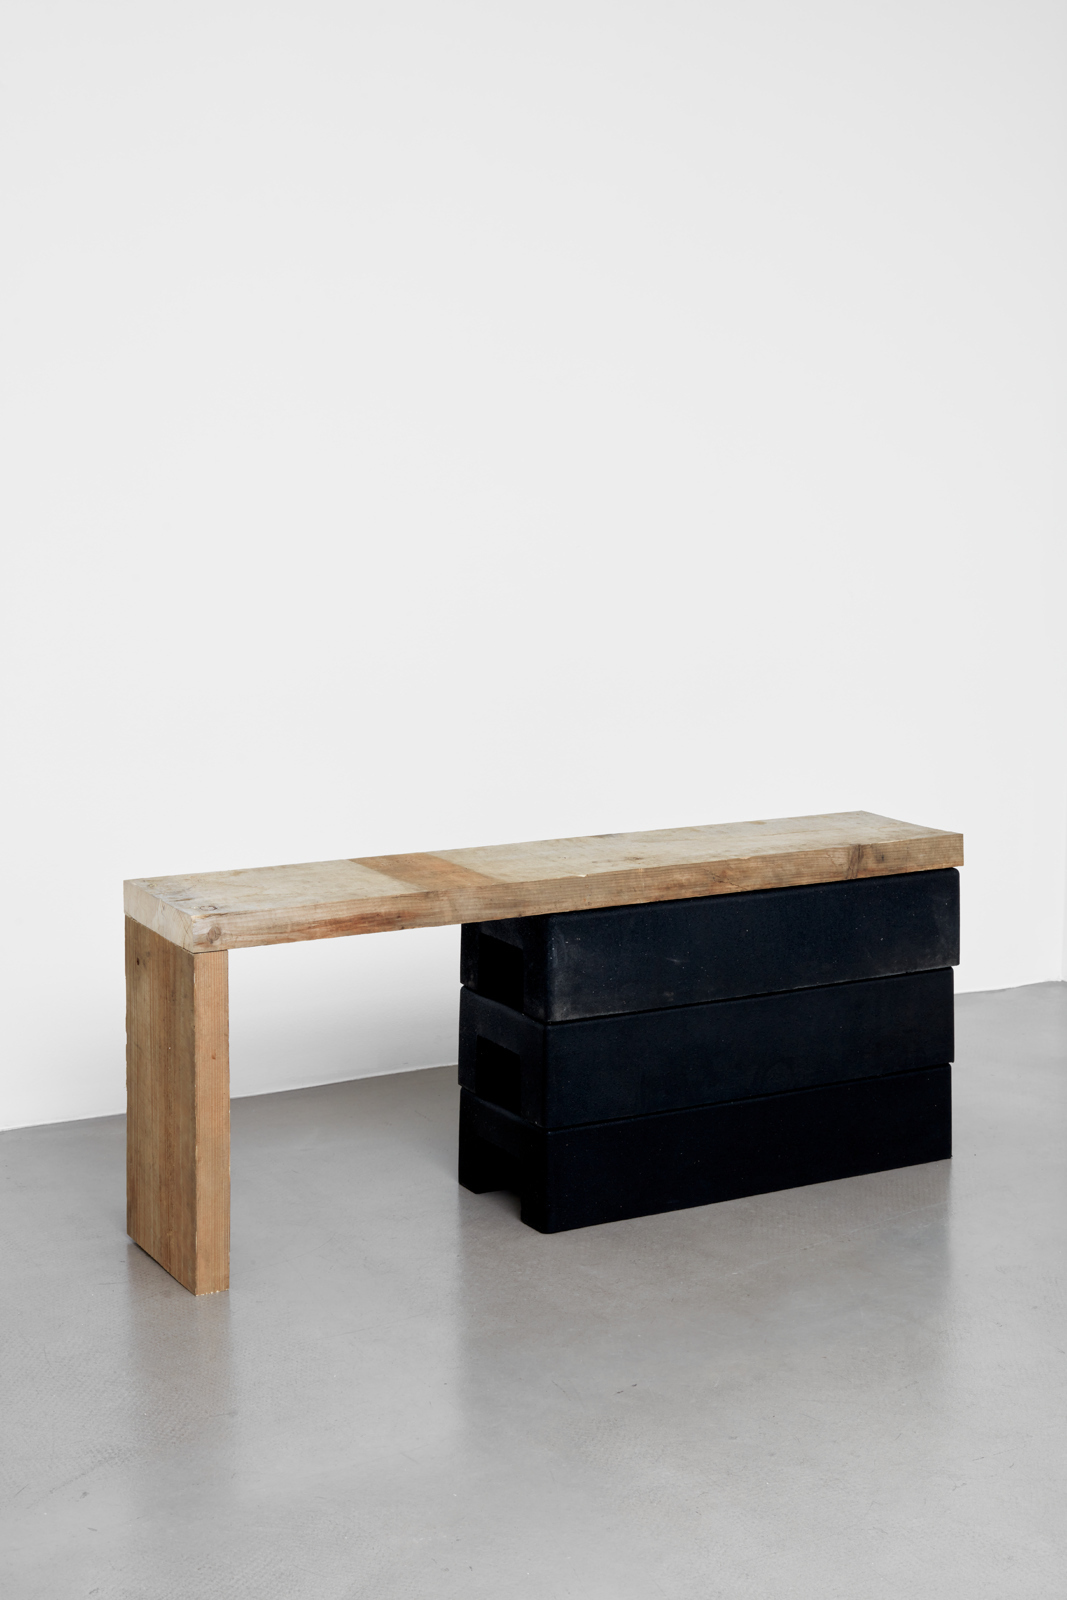 Klara Liden, Untitled (bench), 2020. © Klara Liden, courtesy Sadie Coles HQ, London.